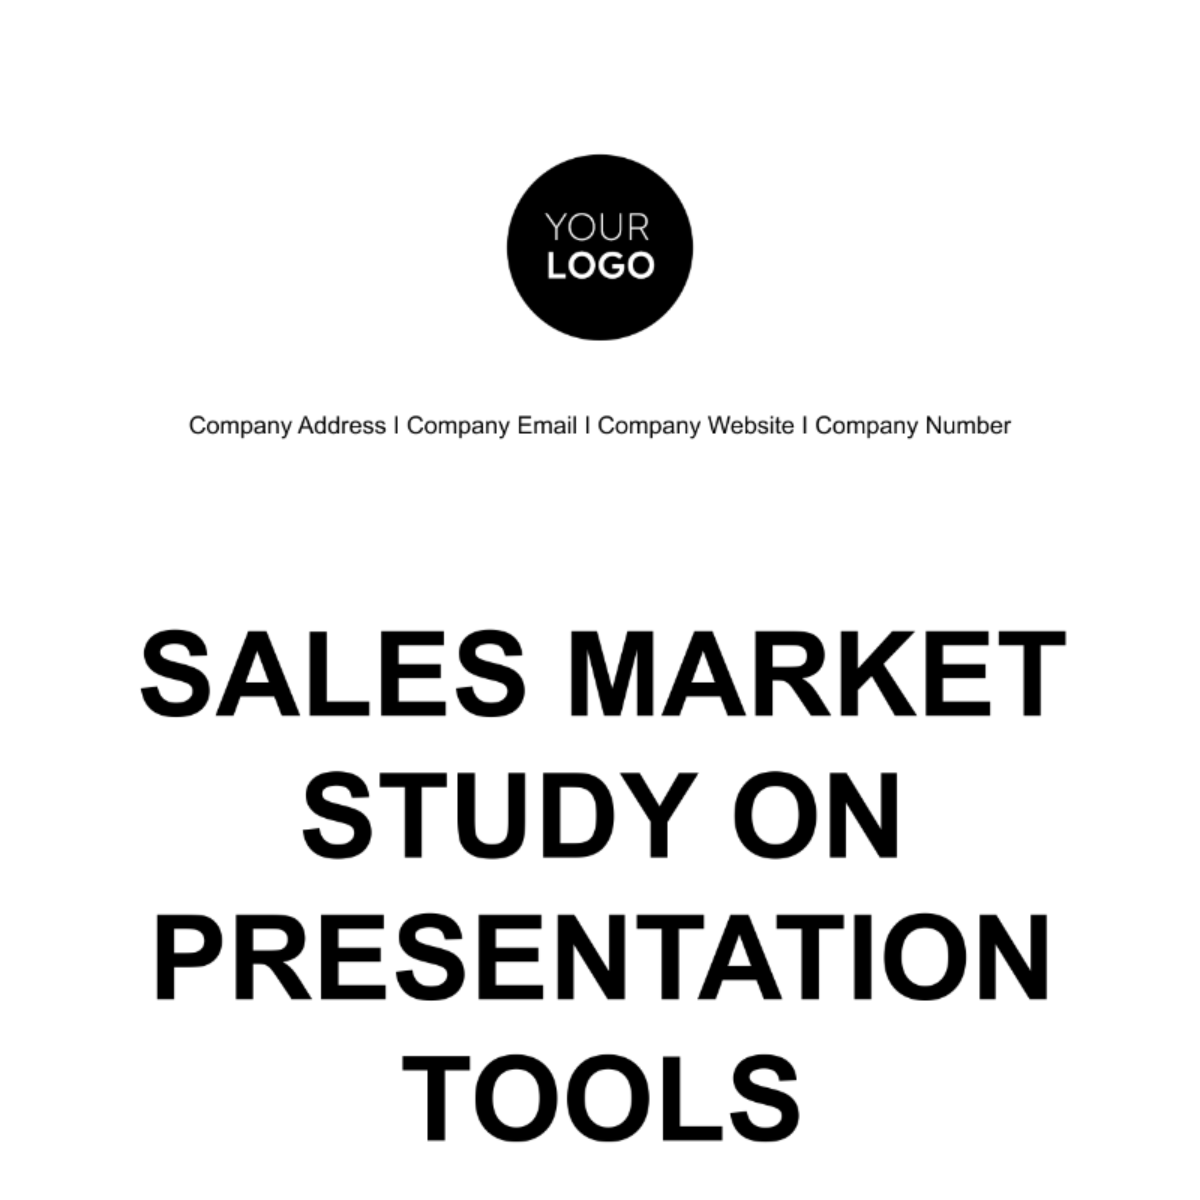 Free Sales Market Study on Presentation Tools Template